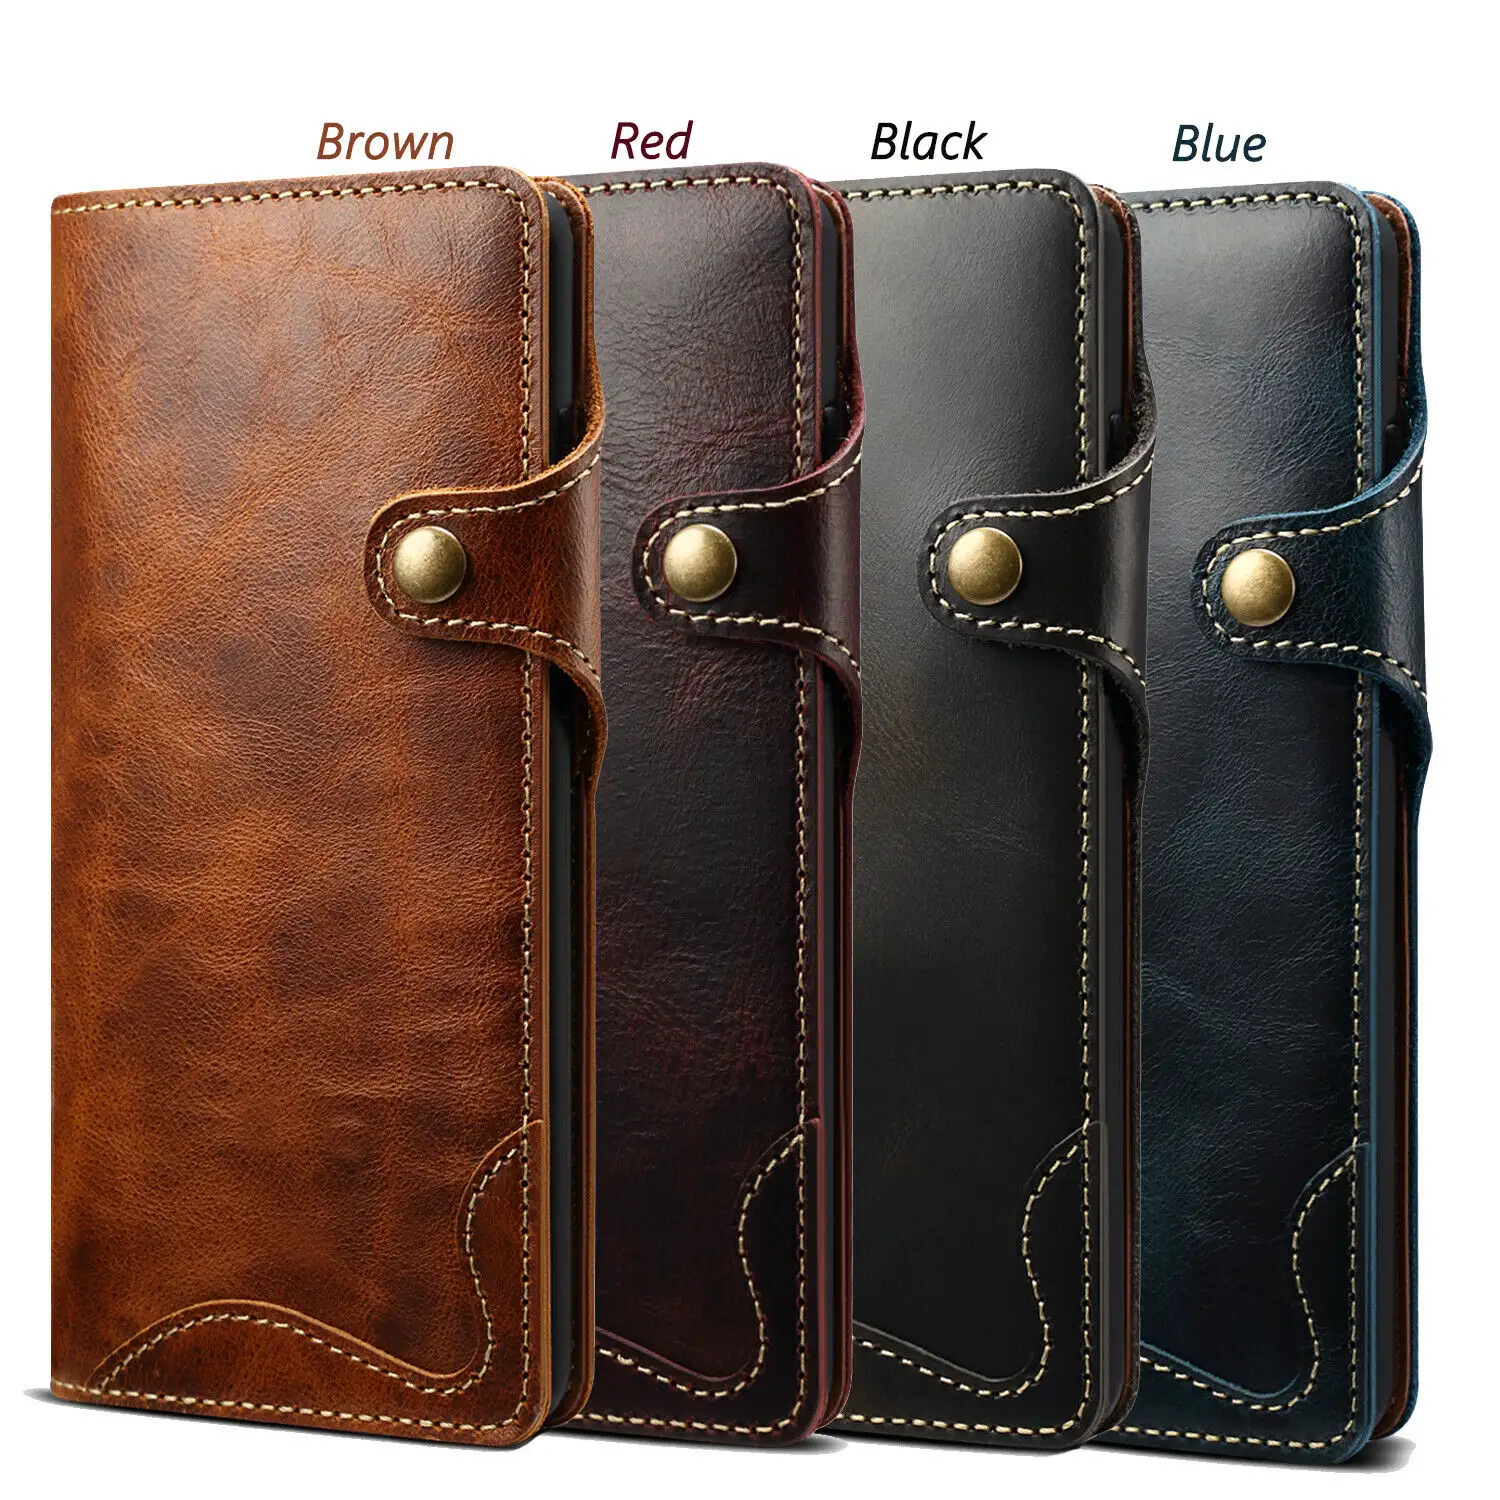 Book Design Retro Real Leather Flip Case Cover For Samsung Galaxy S8 S9 S10 S20 plus Note 8/9/10 pro